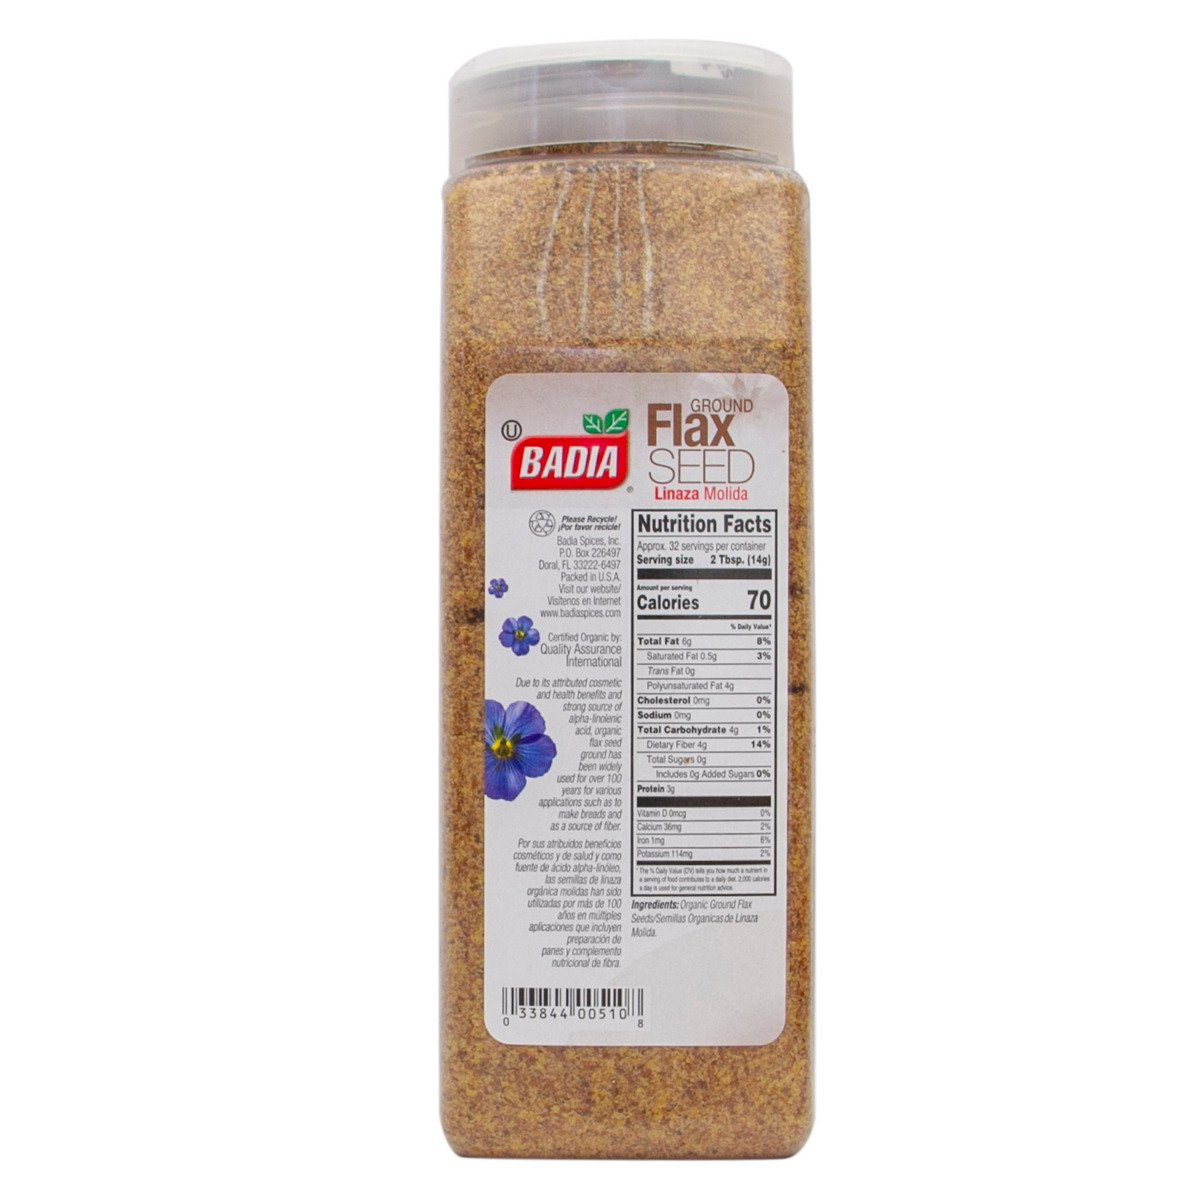 Badia Organic Ground Flax Seed 453.6 g